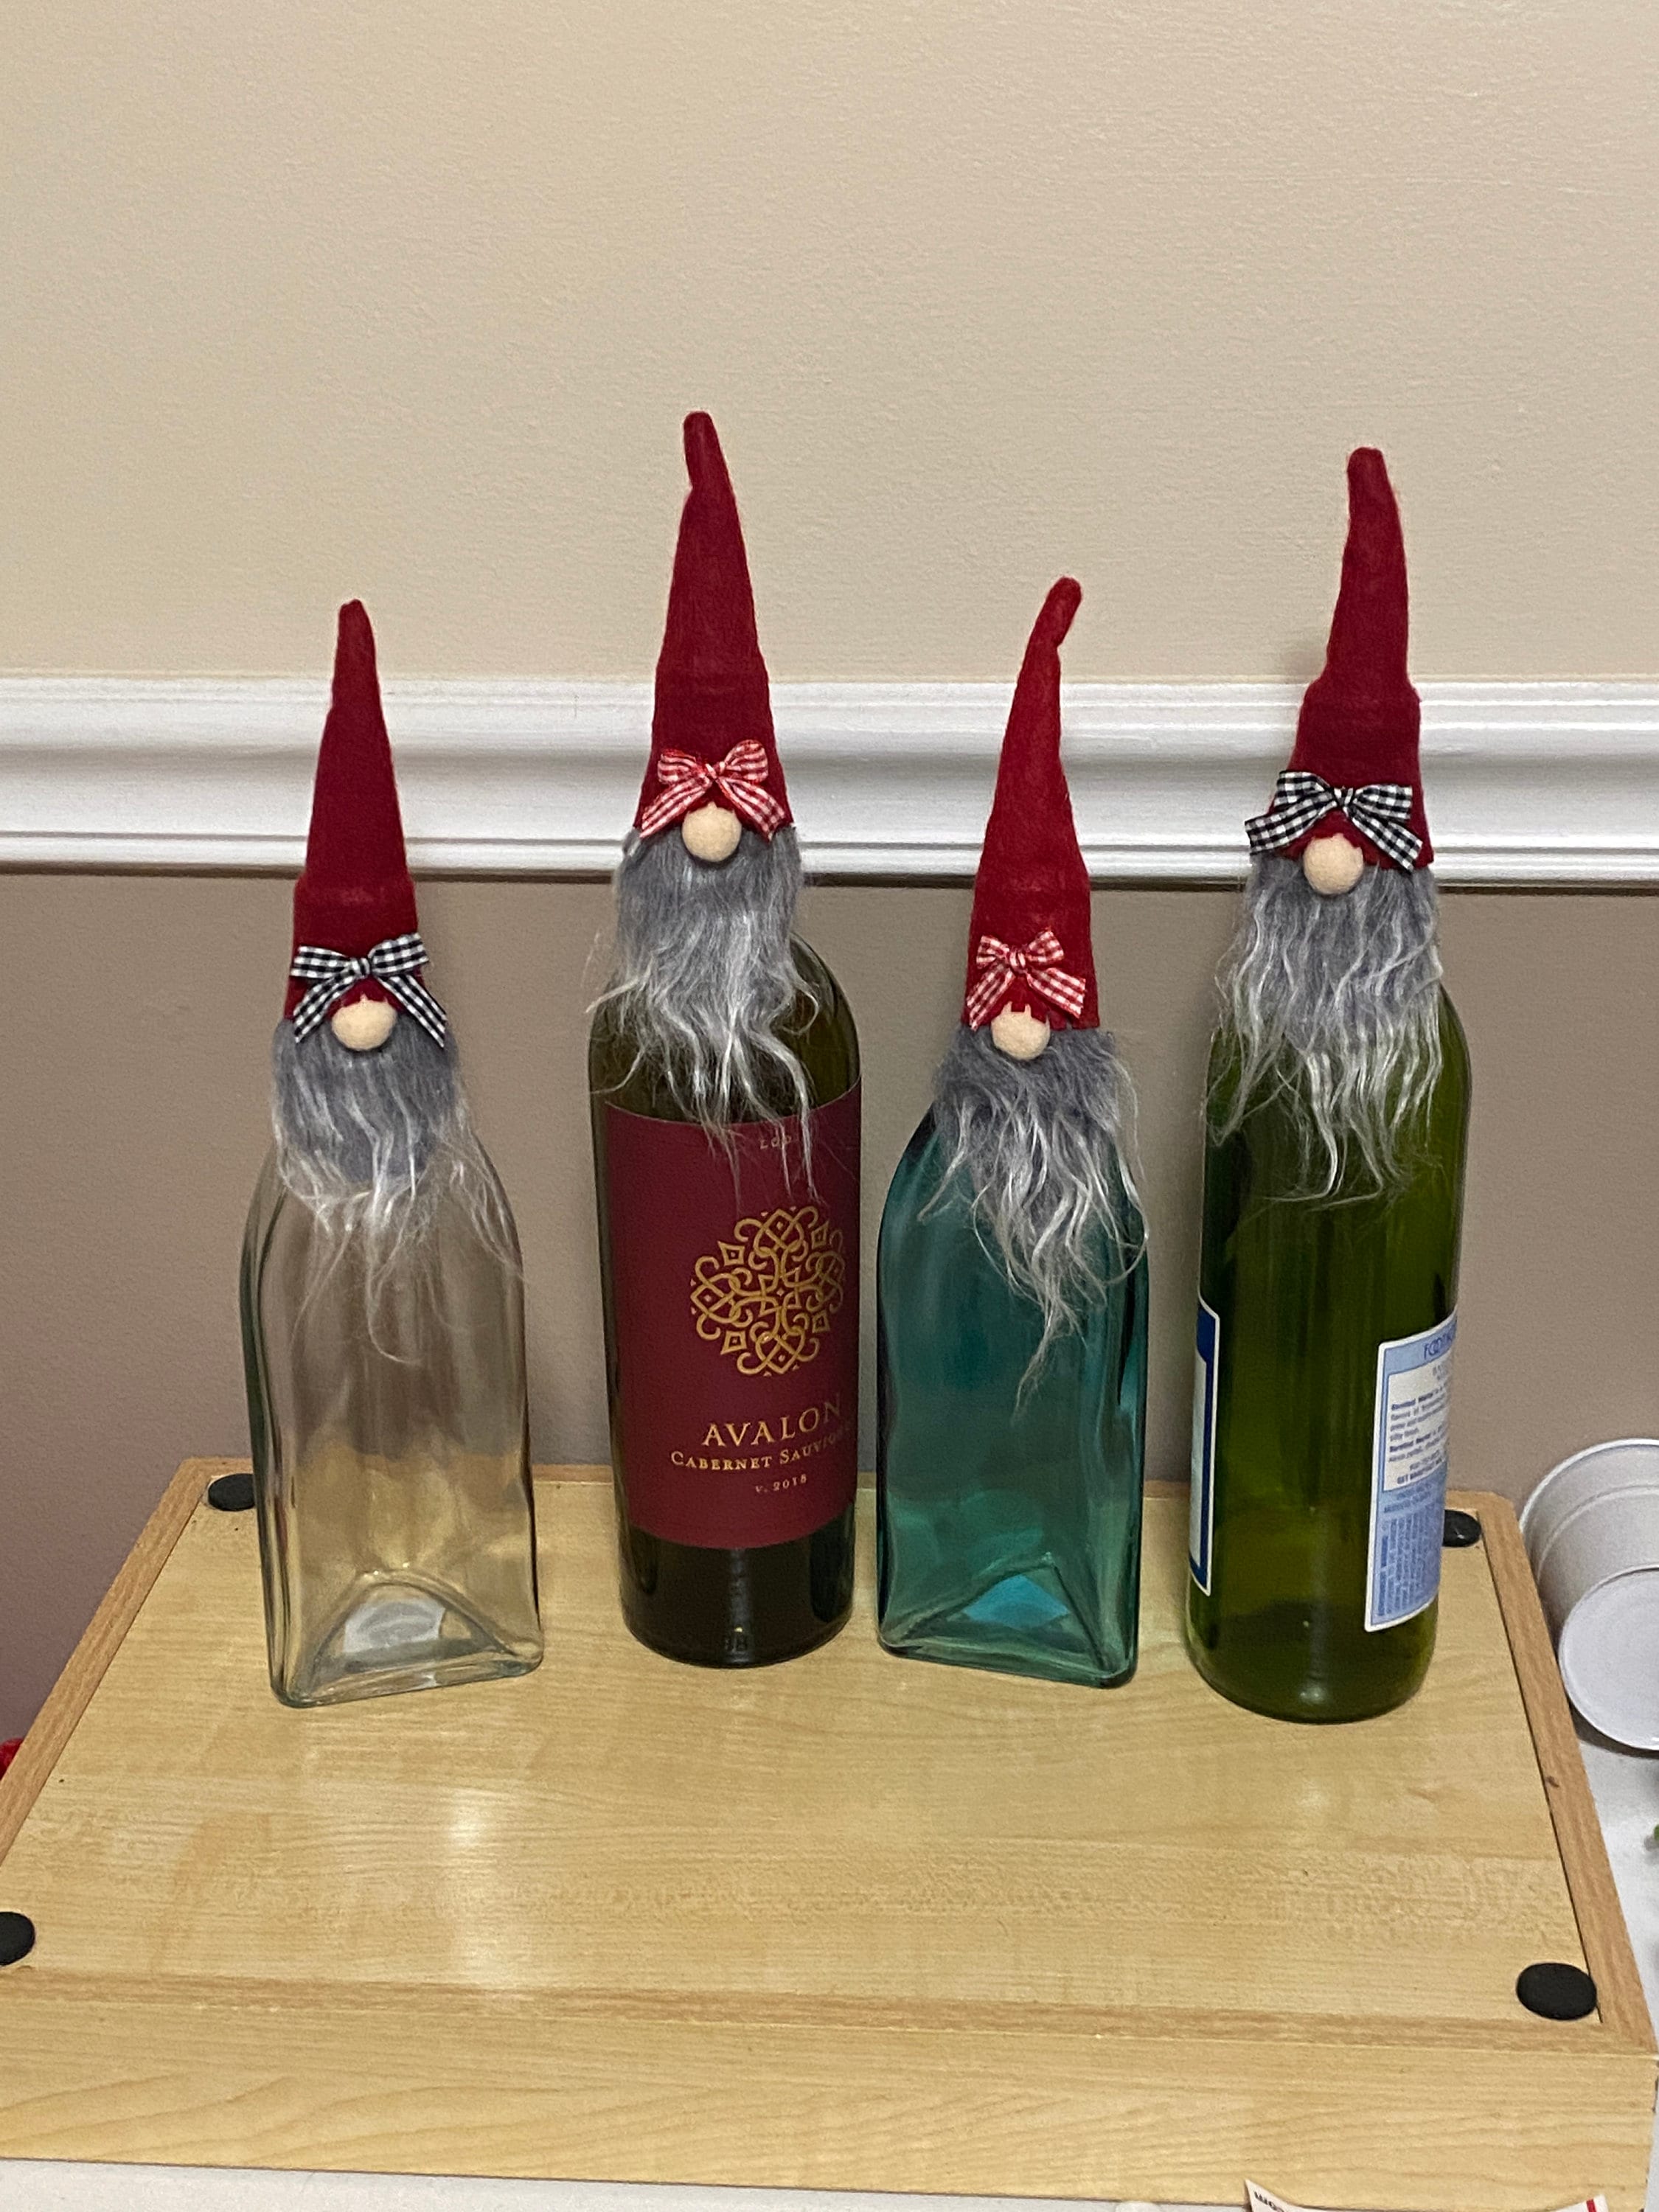 PartyTalk 6pcs Christmas Wine Bottle Toppers Decorative Handmade Swedish Tomte Gnome Wine Bottle Toppers for Home Holiday Christmas Decorations 